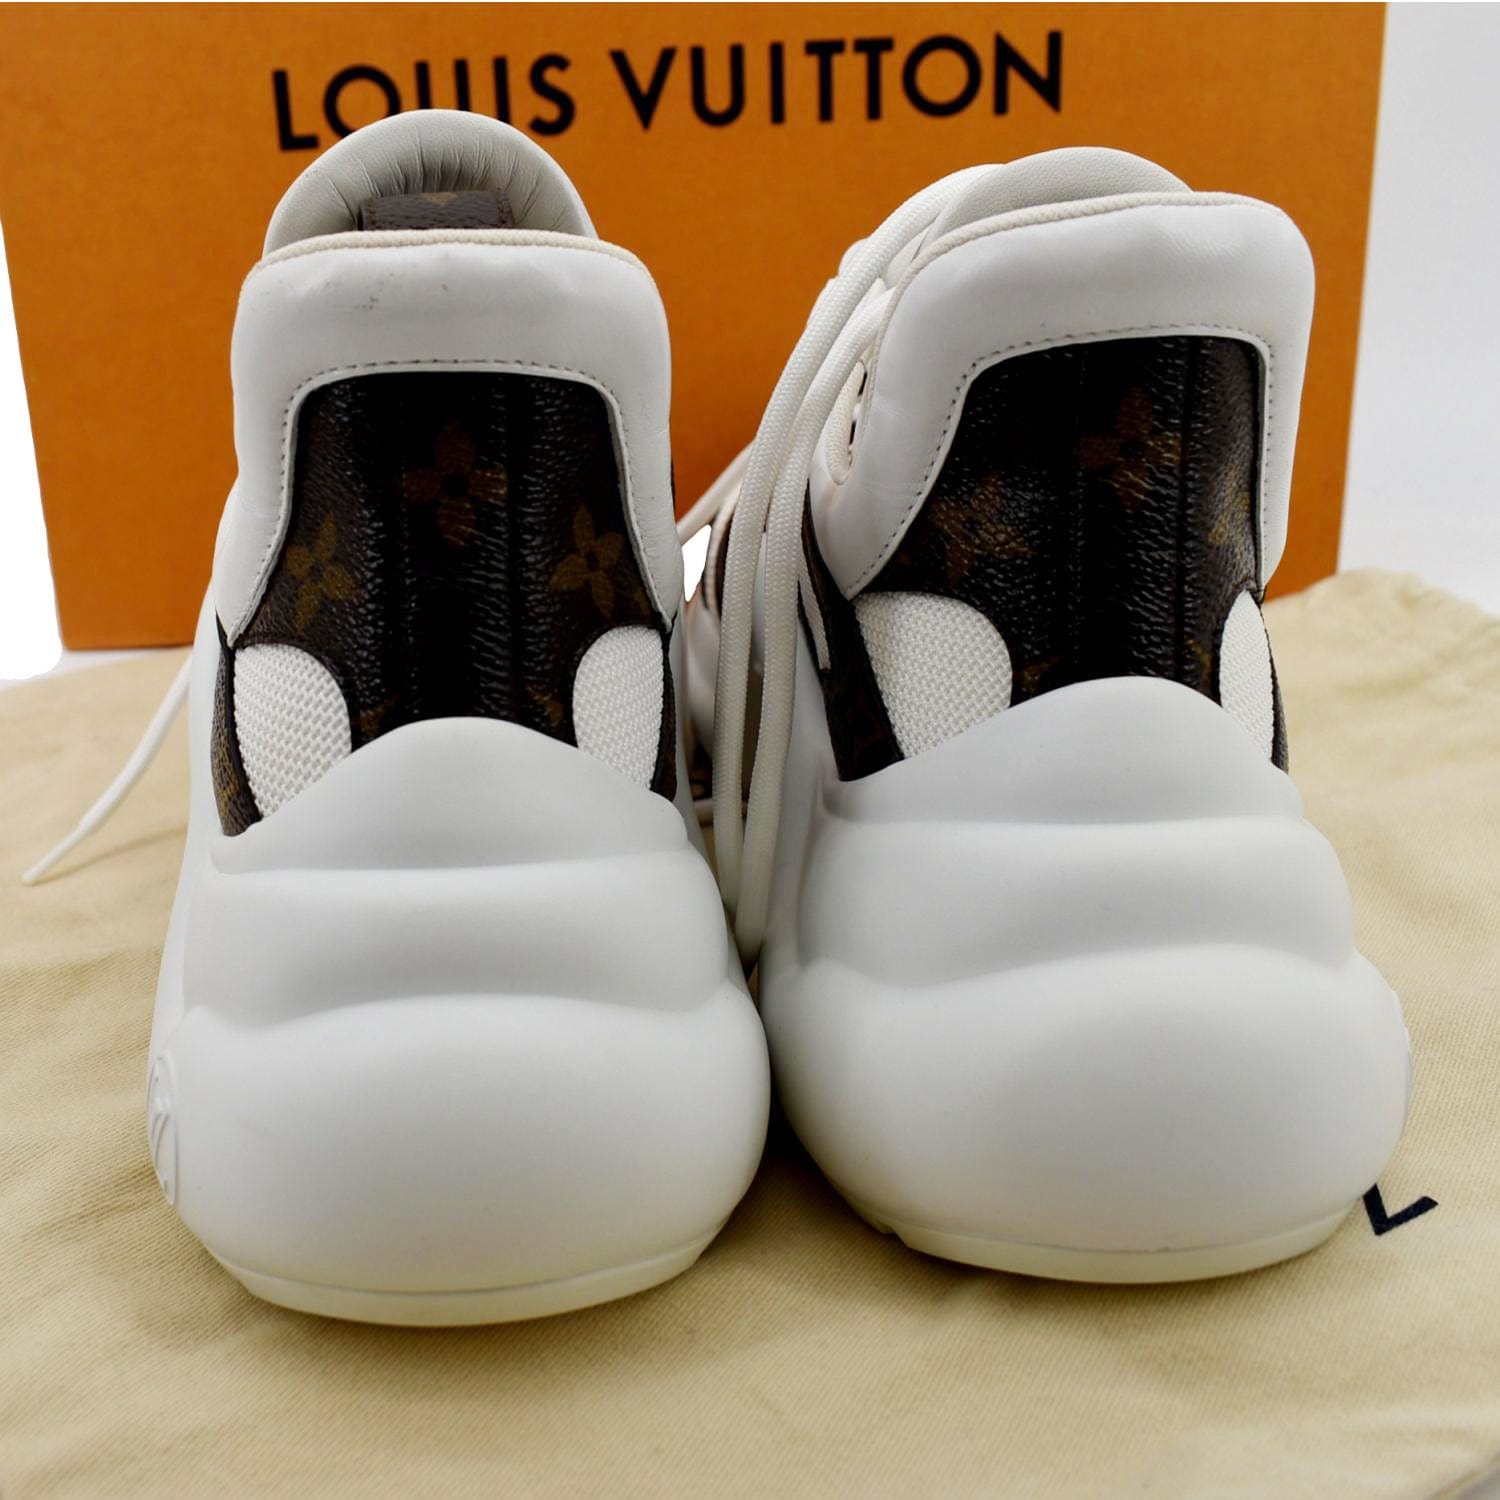 Louis Vuitton Archlight Sneakers in White Monogram